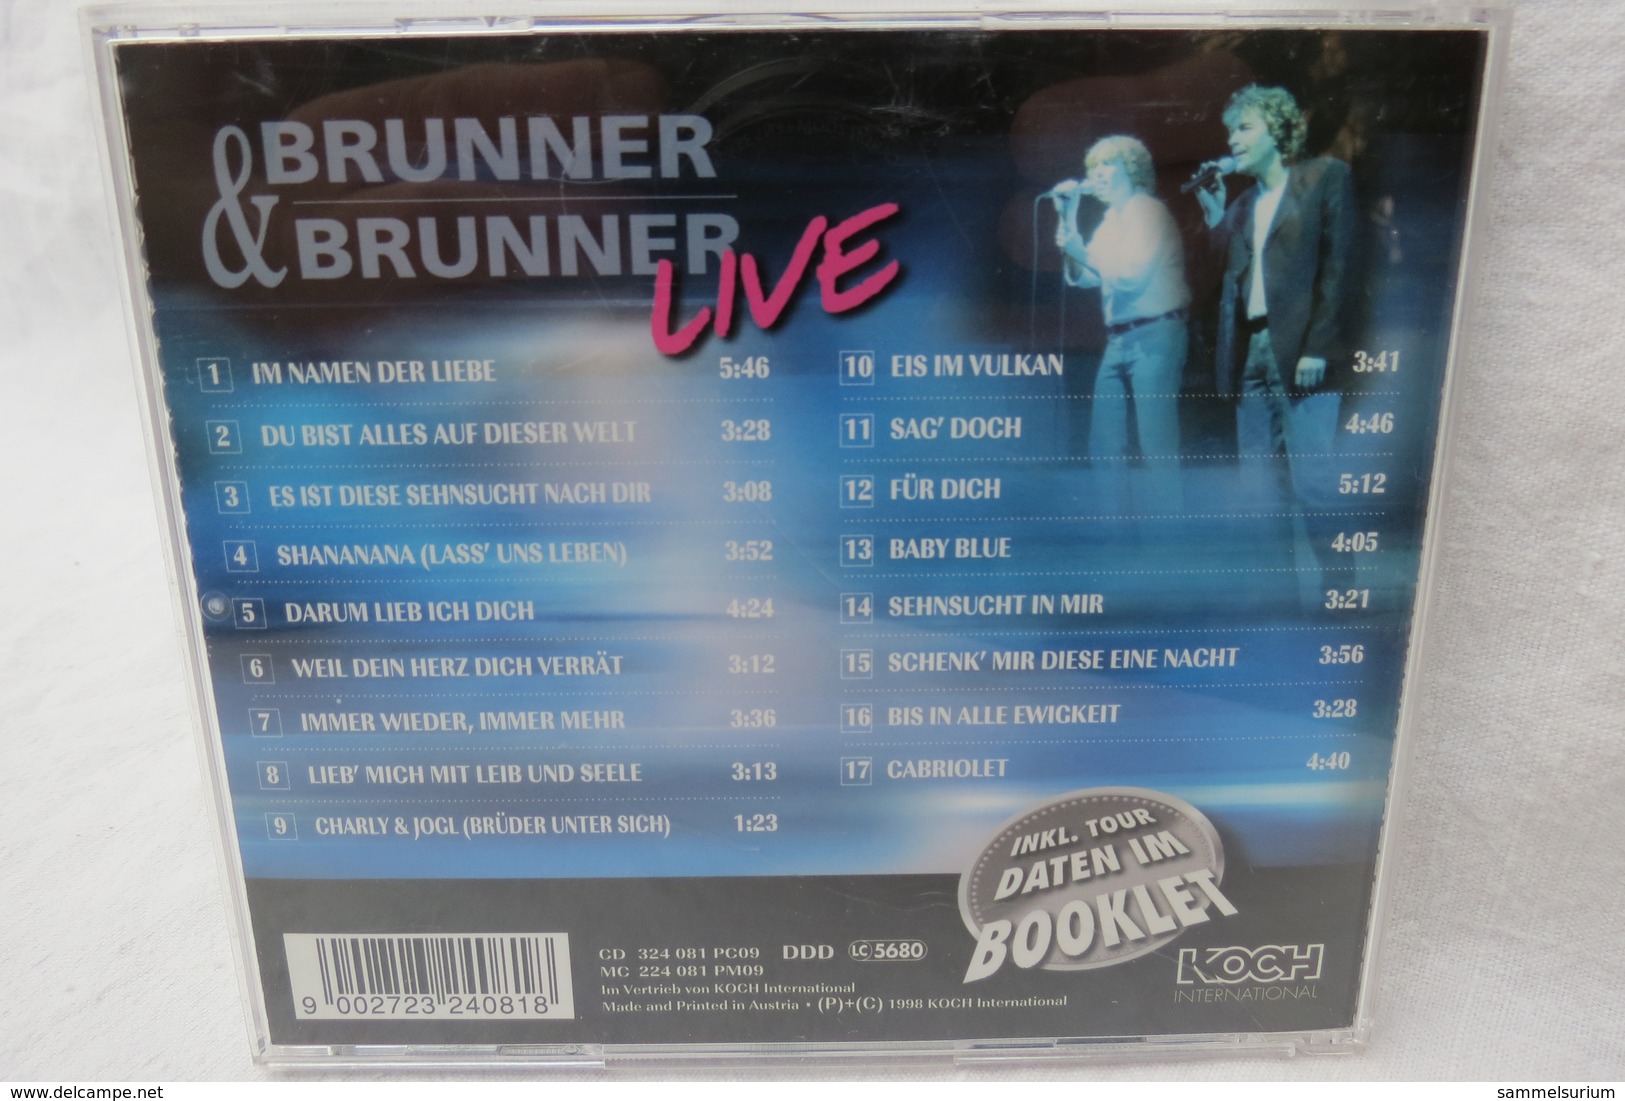 CD "Brunner & Brunner" Das Konzert, Live - Otros - Canción Alemana